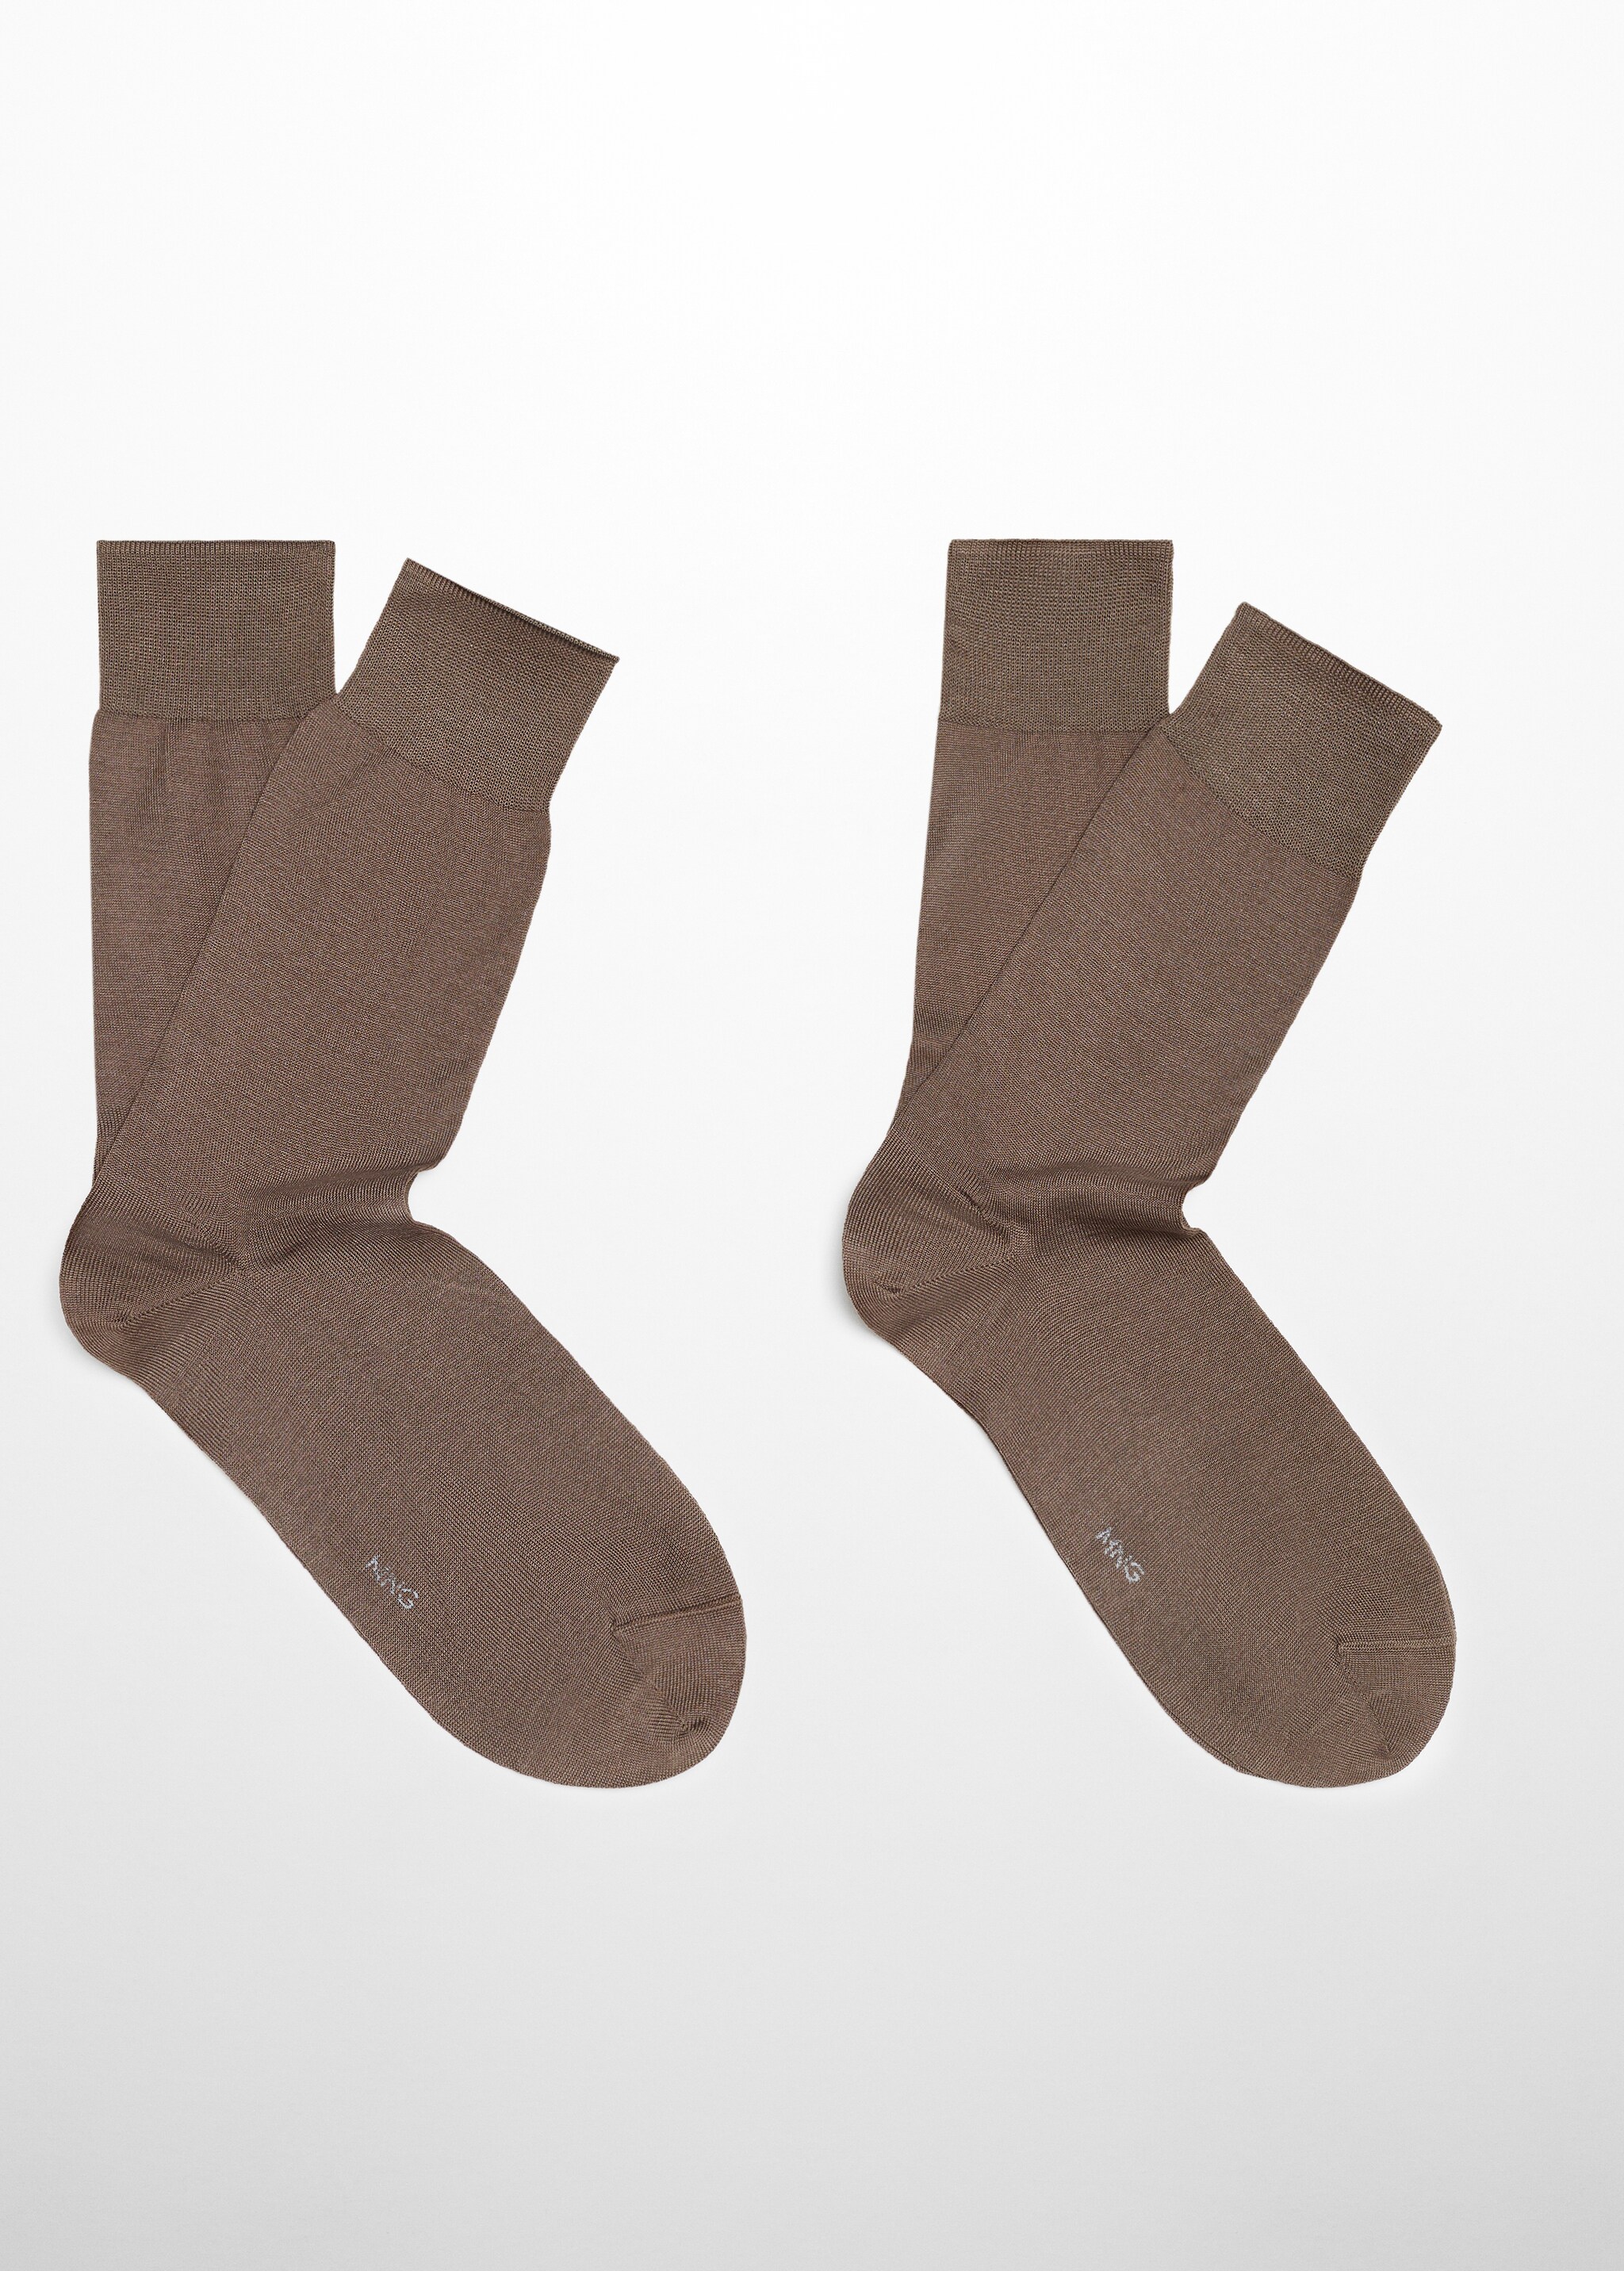 Basic cotton socks - Article without model